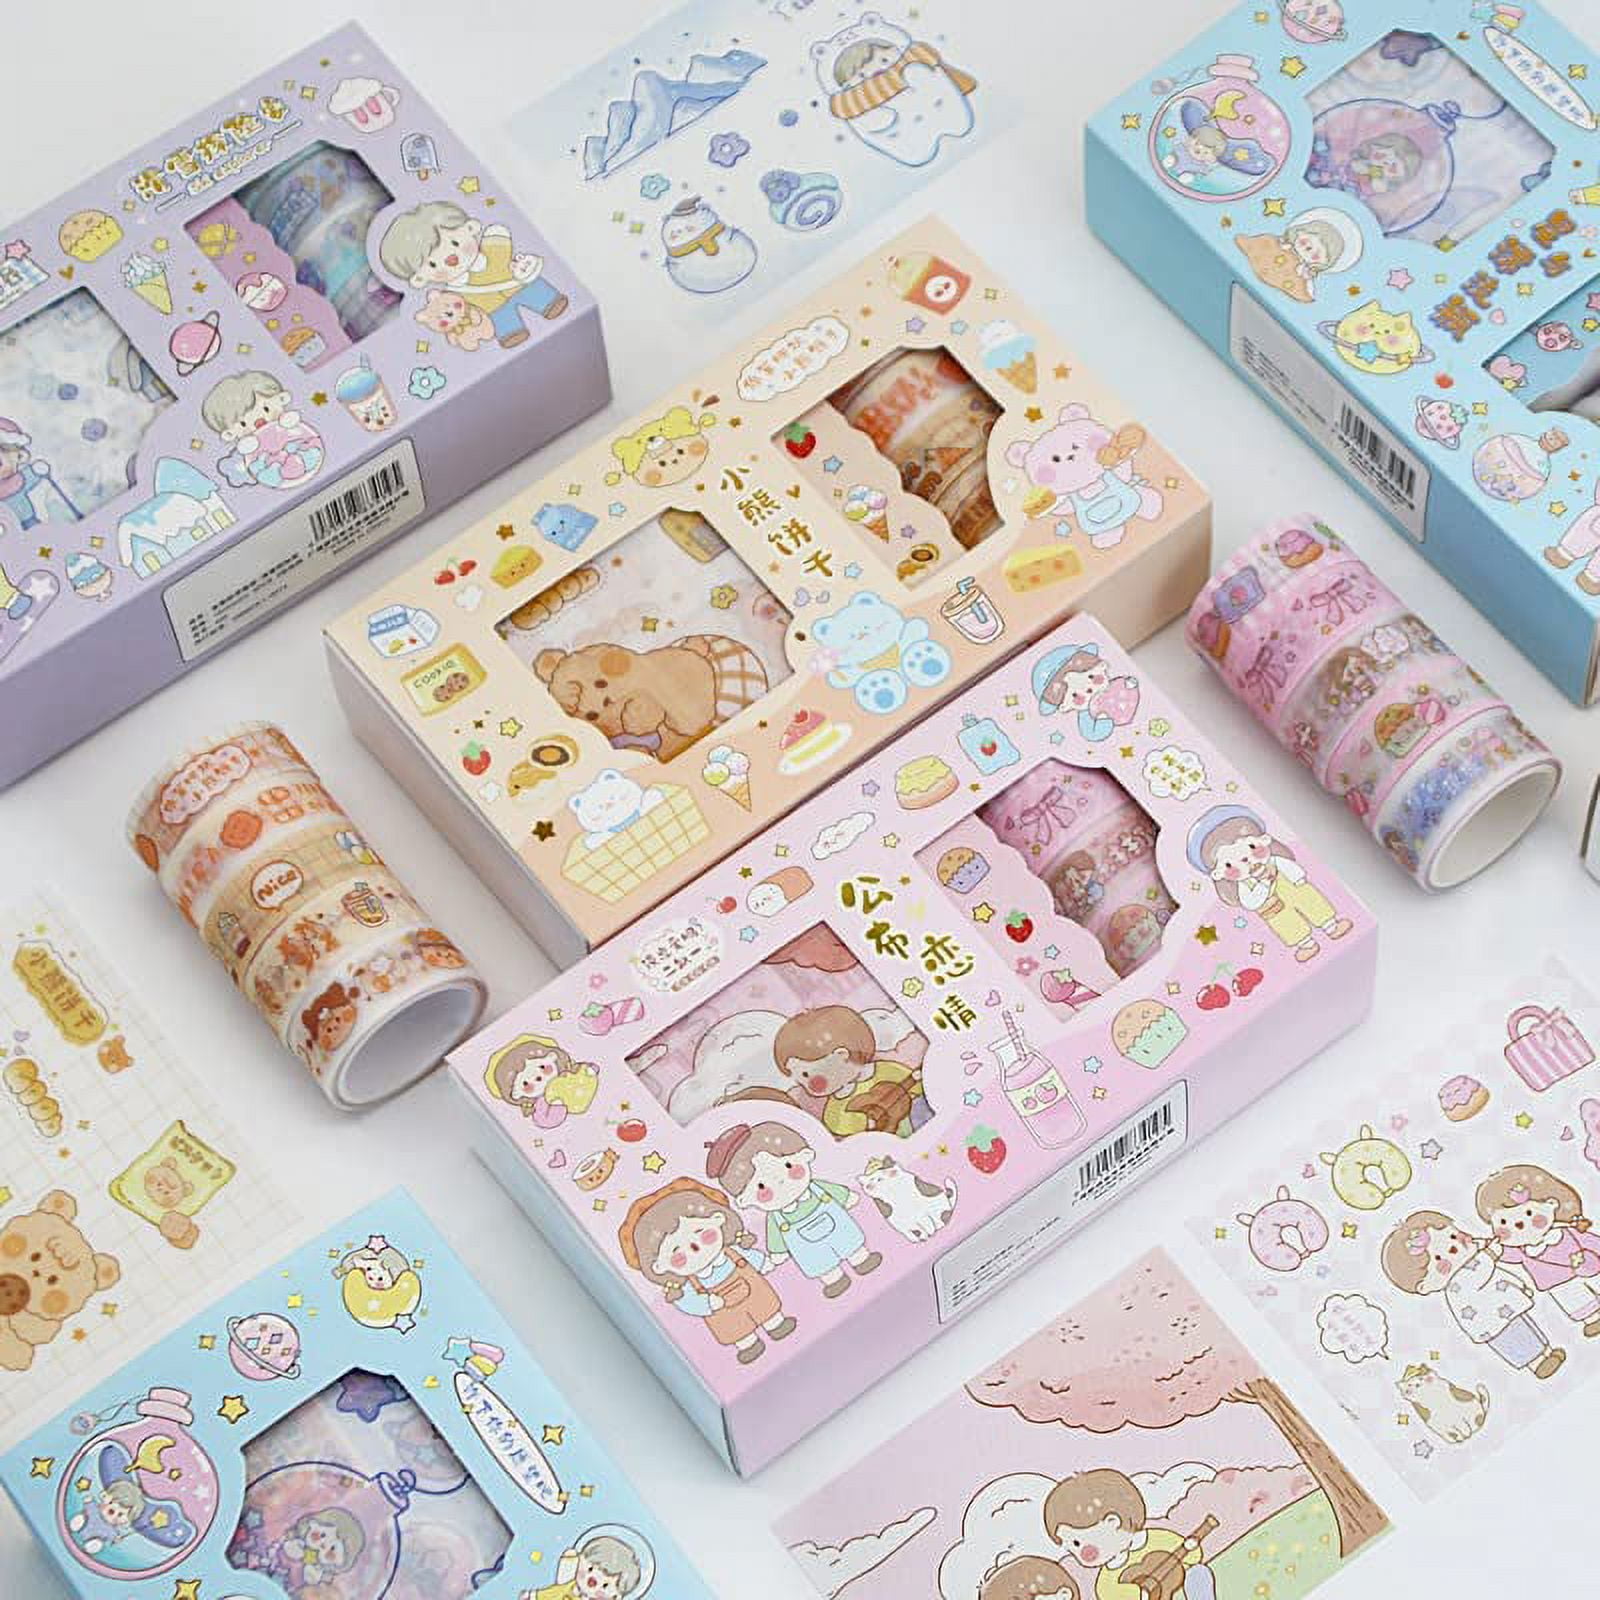 Ekoi Magical Theme Washi Tape - 8 Rolls 15 mm Cute Kawaii Gold Print Cartoon Design Decorative Masking Sticky Japanese Duct Tape Stickers for